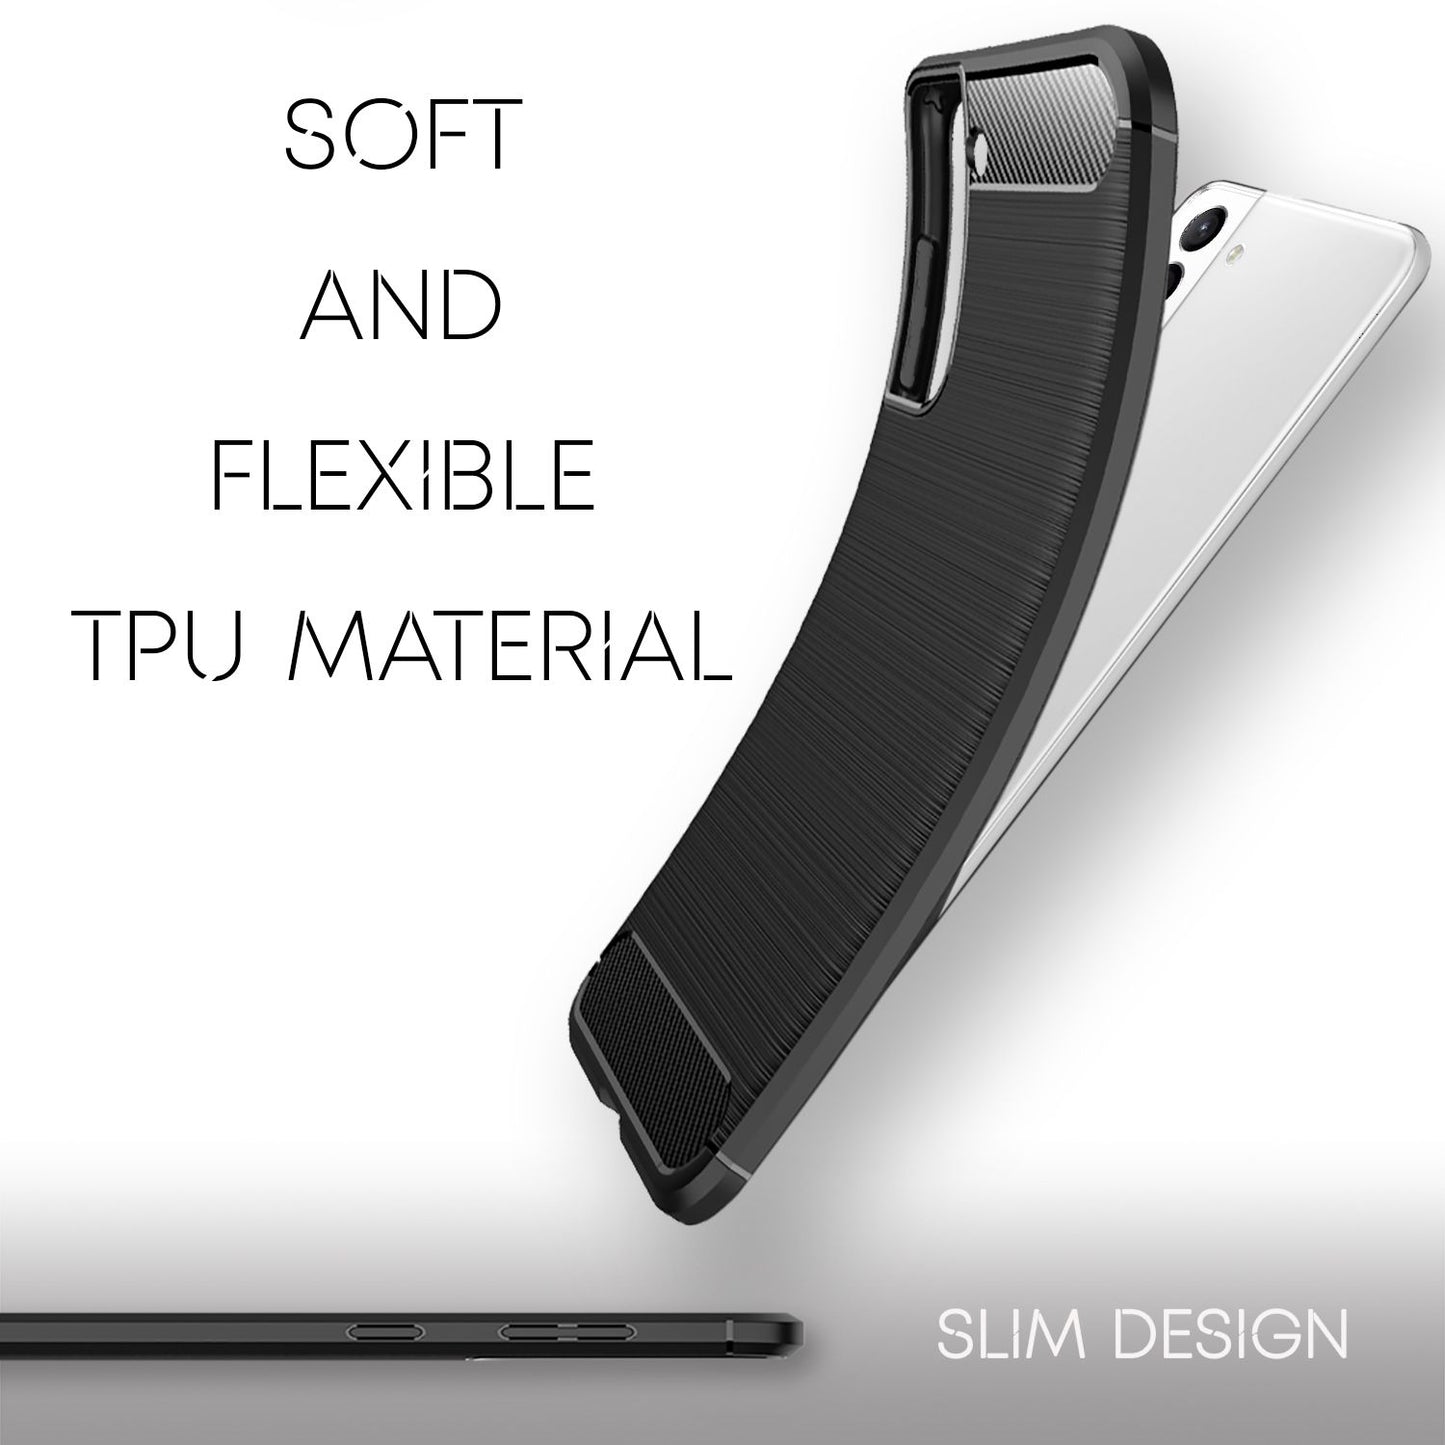 NALIA Carbon Look Case kompatibel mit Samsung Galaxy S21 FE, Matt-Schwarze Silikonhülle in eleganter Kohlefaser-Optik